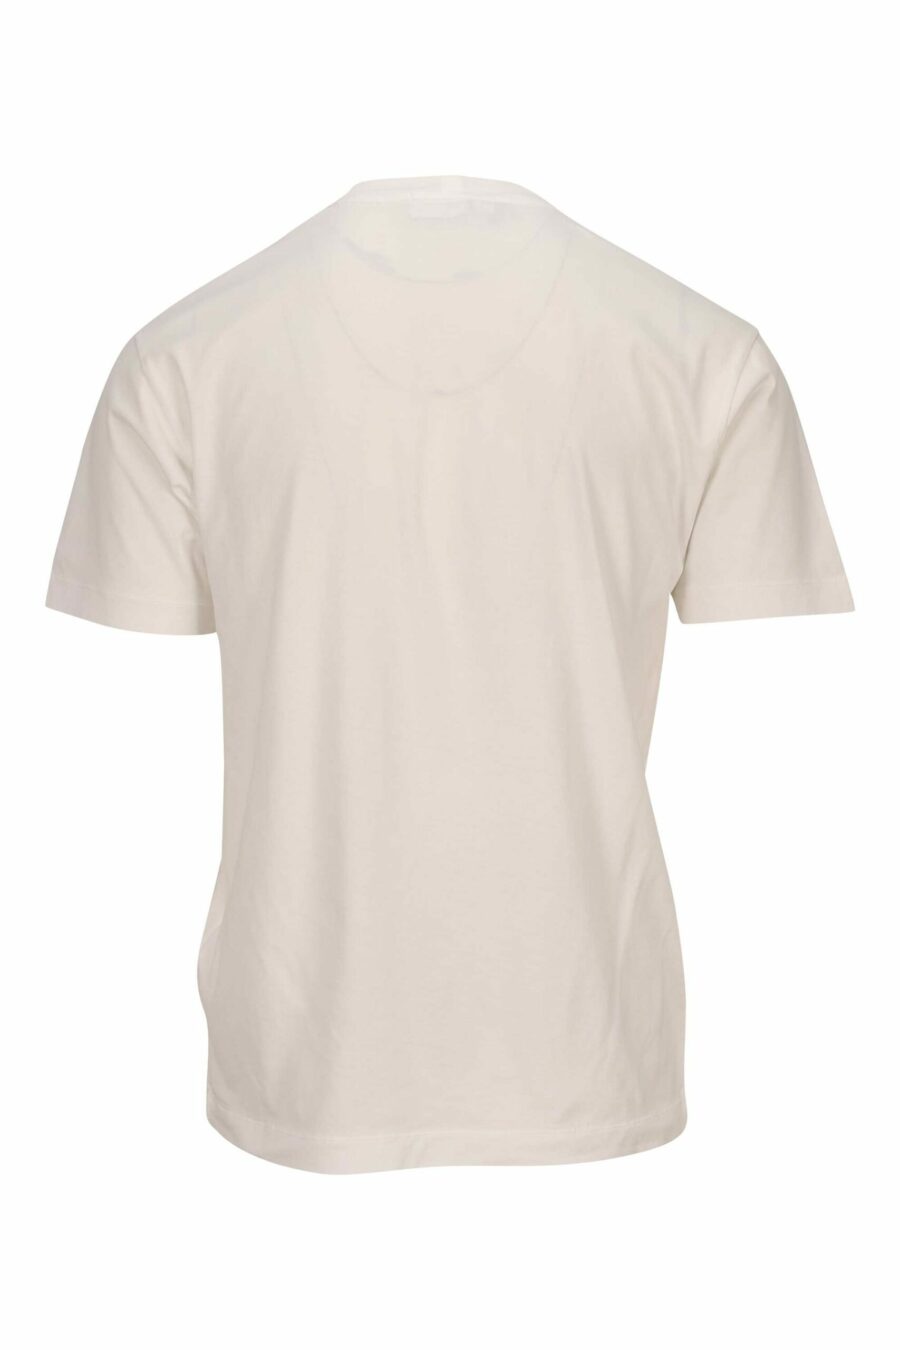 T-shirt blanc avec mini logo compass patch - 8052572855146 1 scaled